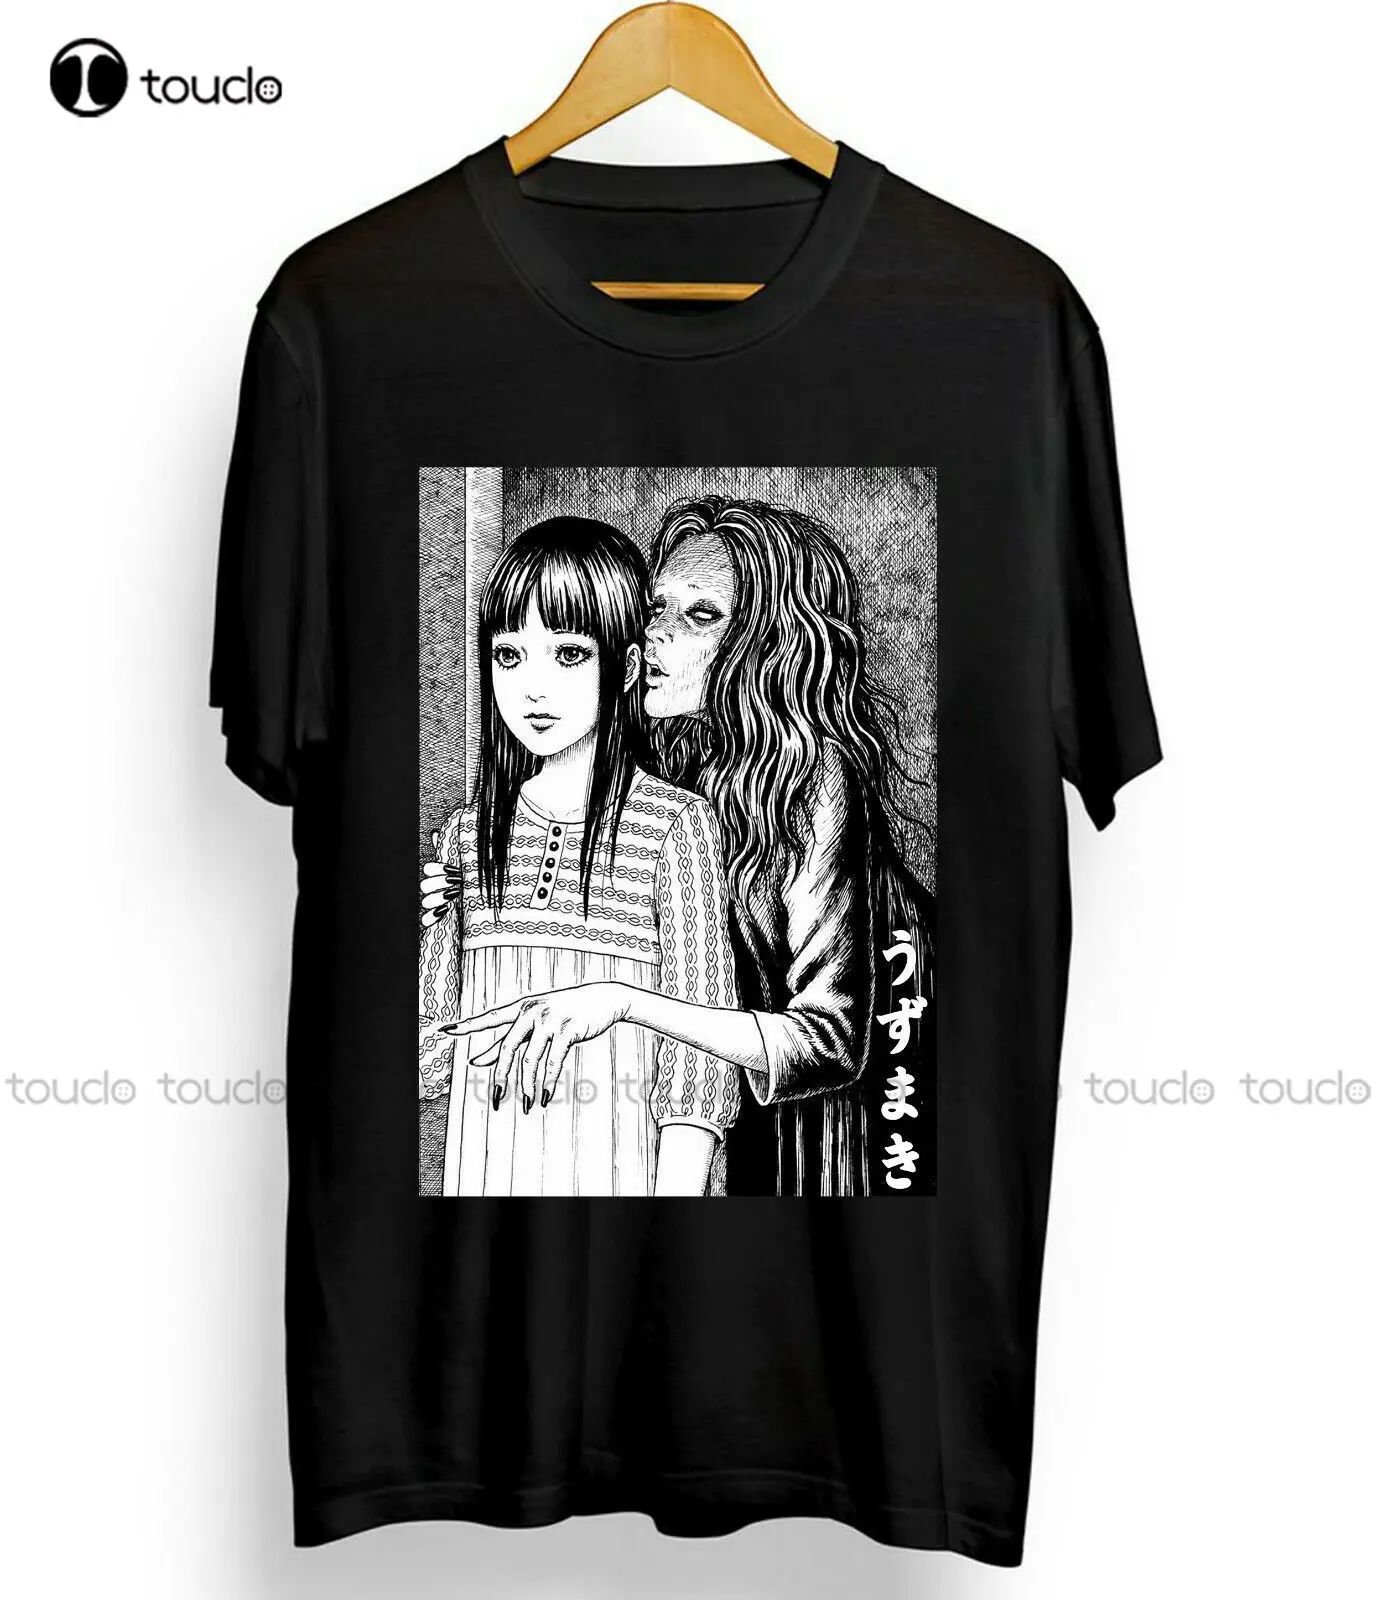 

Uzumaki Junji Ito Tomie Horror Manga Anime Top New Unisex T-Shirt T-Shirts For Women Graphic Tees Xs-5Xl Breathable Cotton New